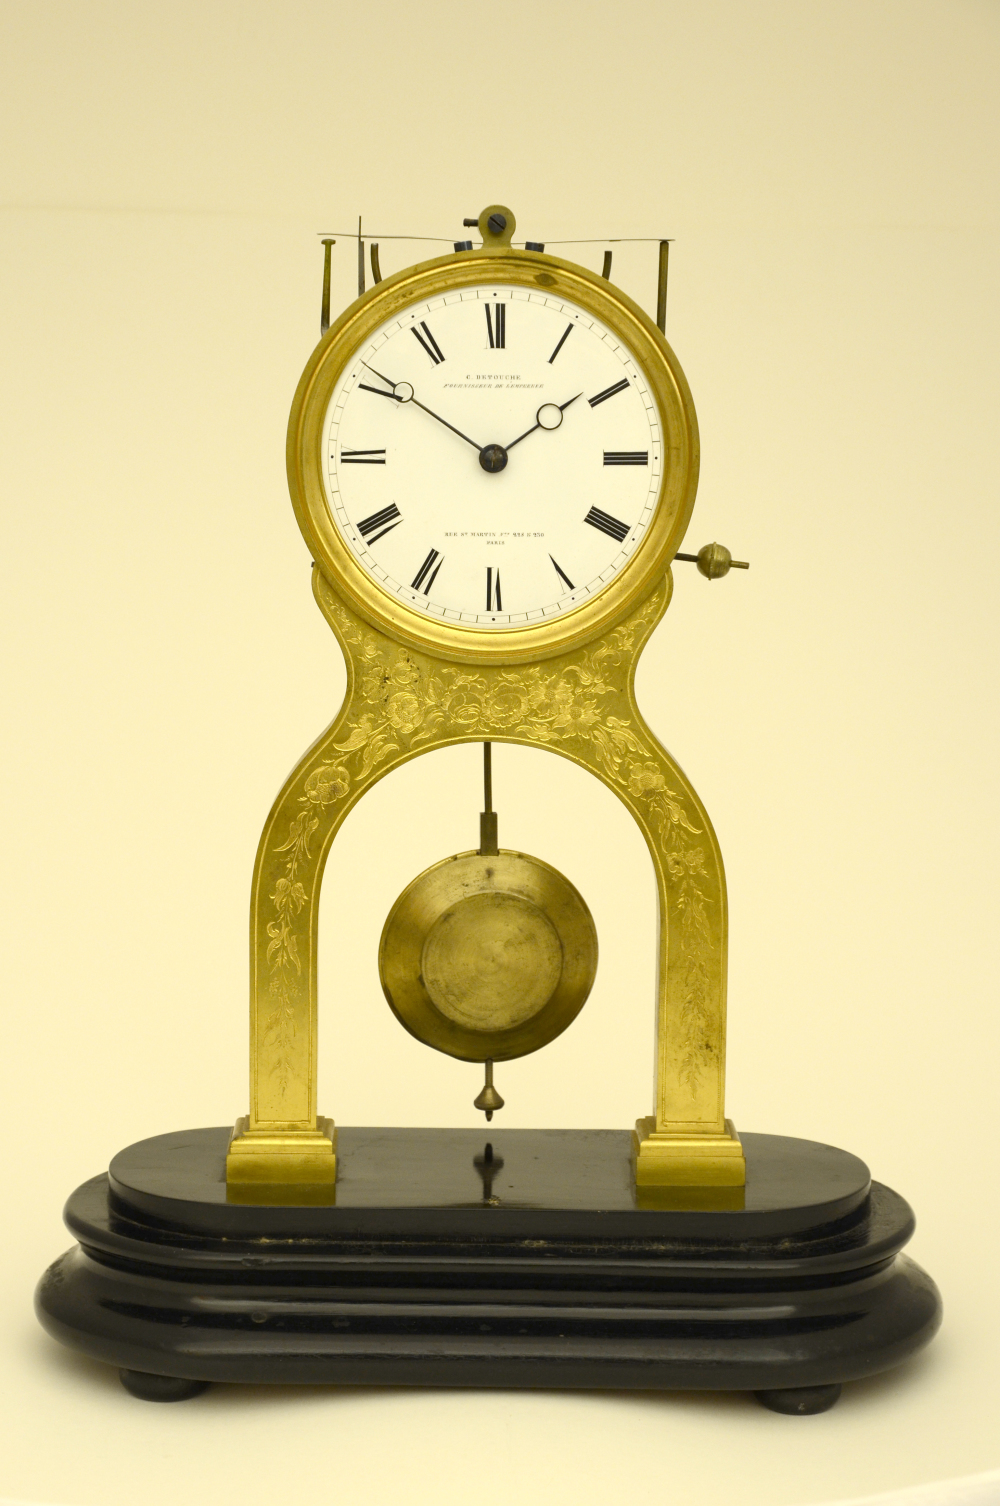 preview image for Electro-Magnetic Clock, by C. Detouche, Paris, c. 1855